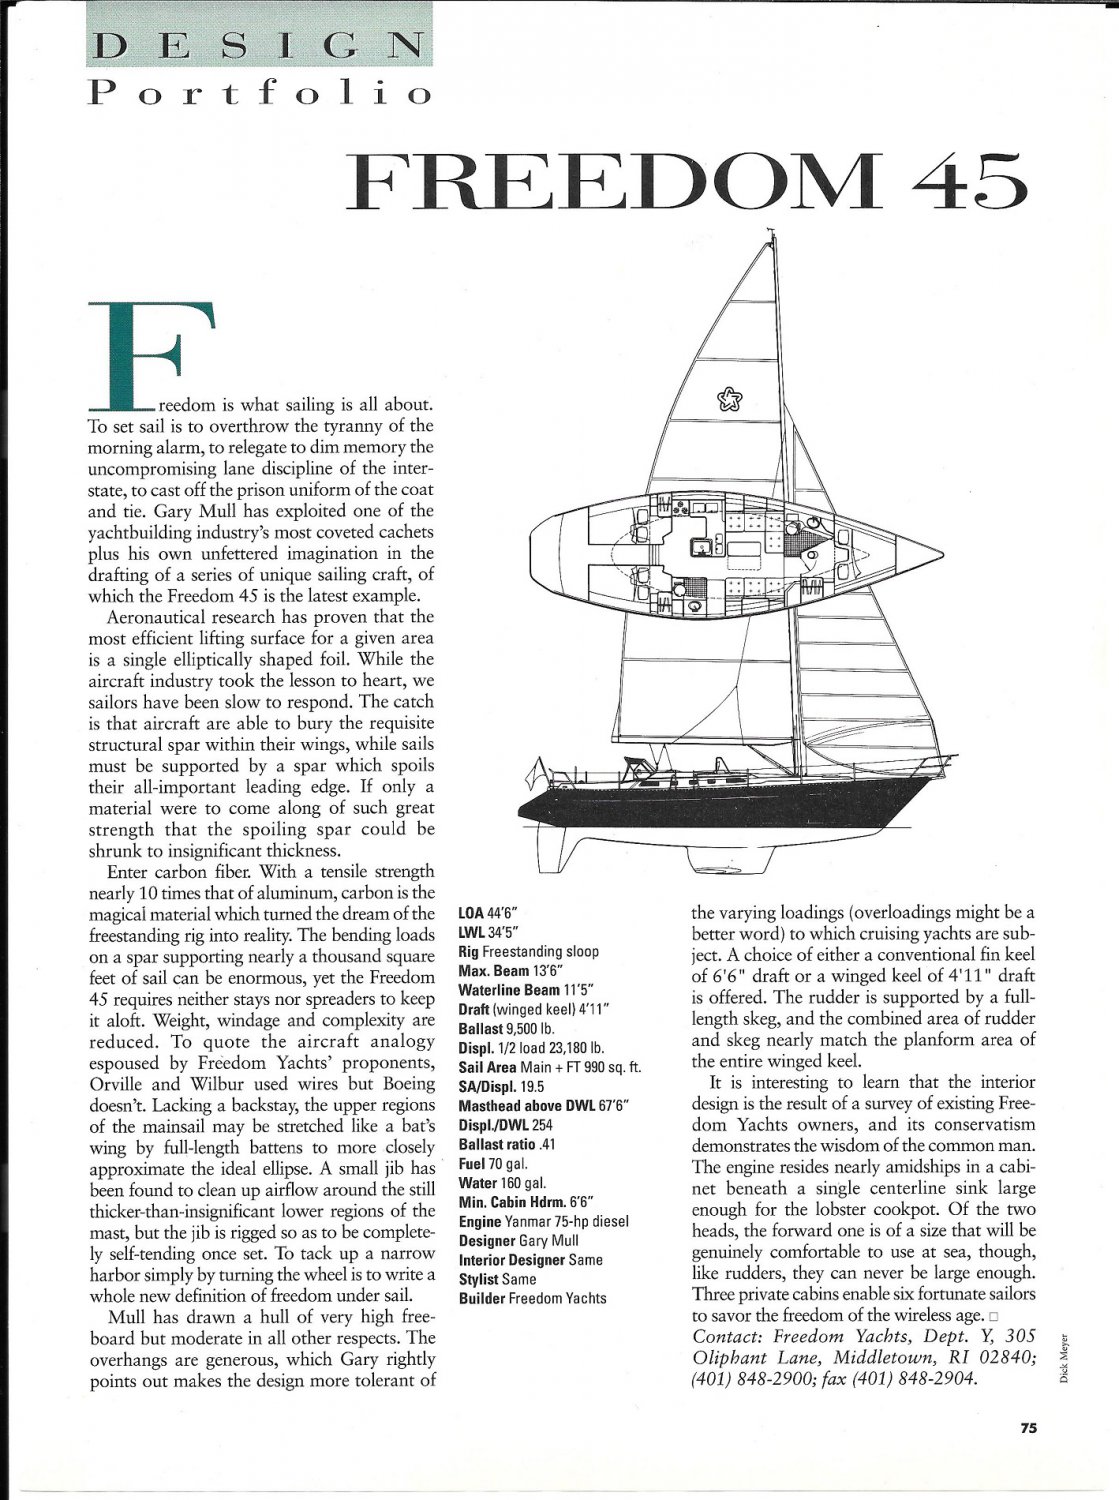 freedom 45 sailboat data